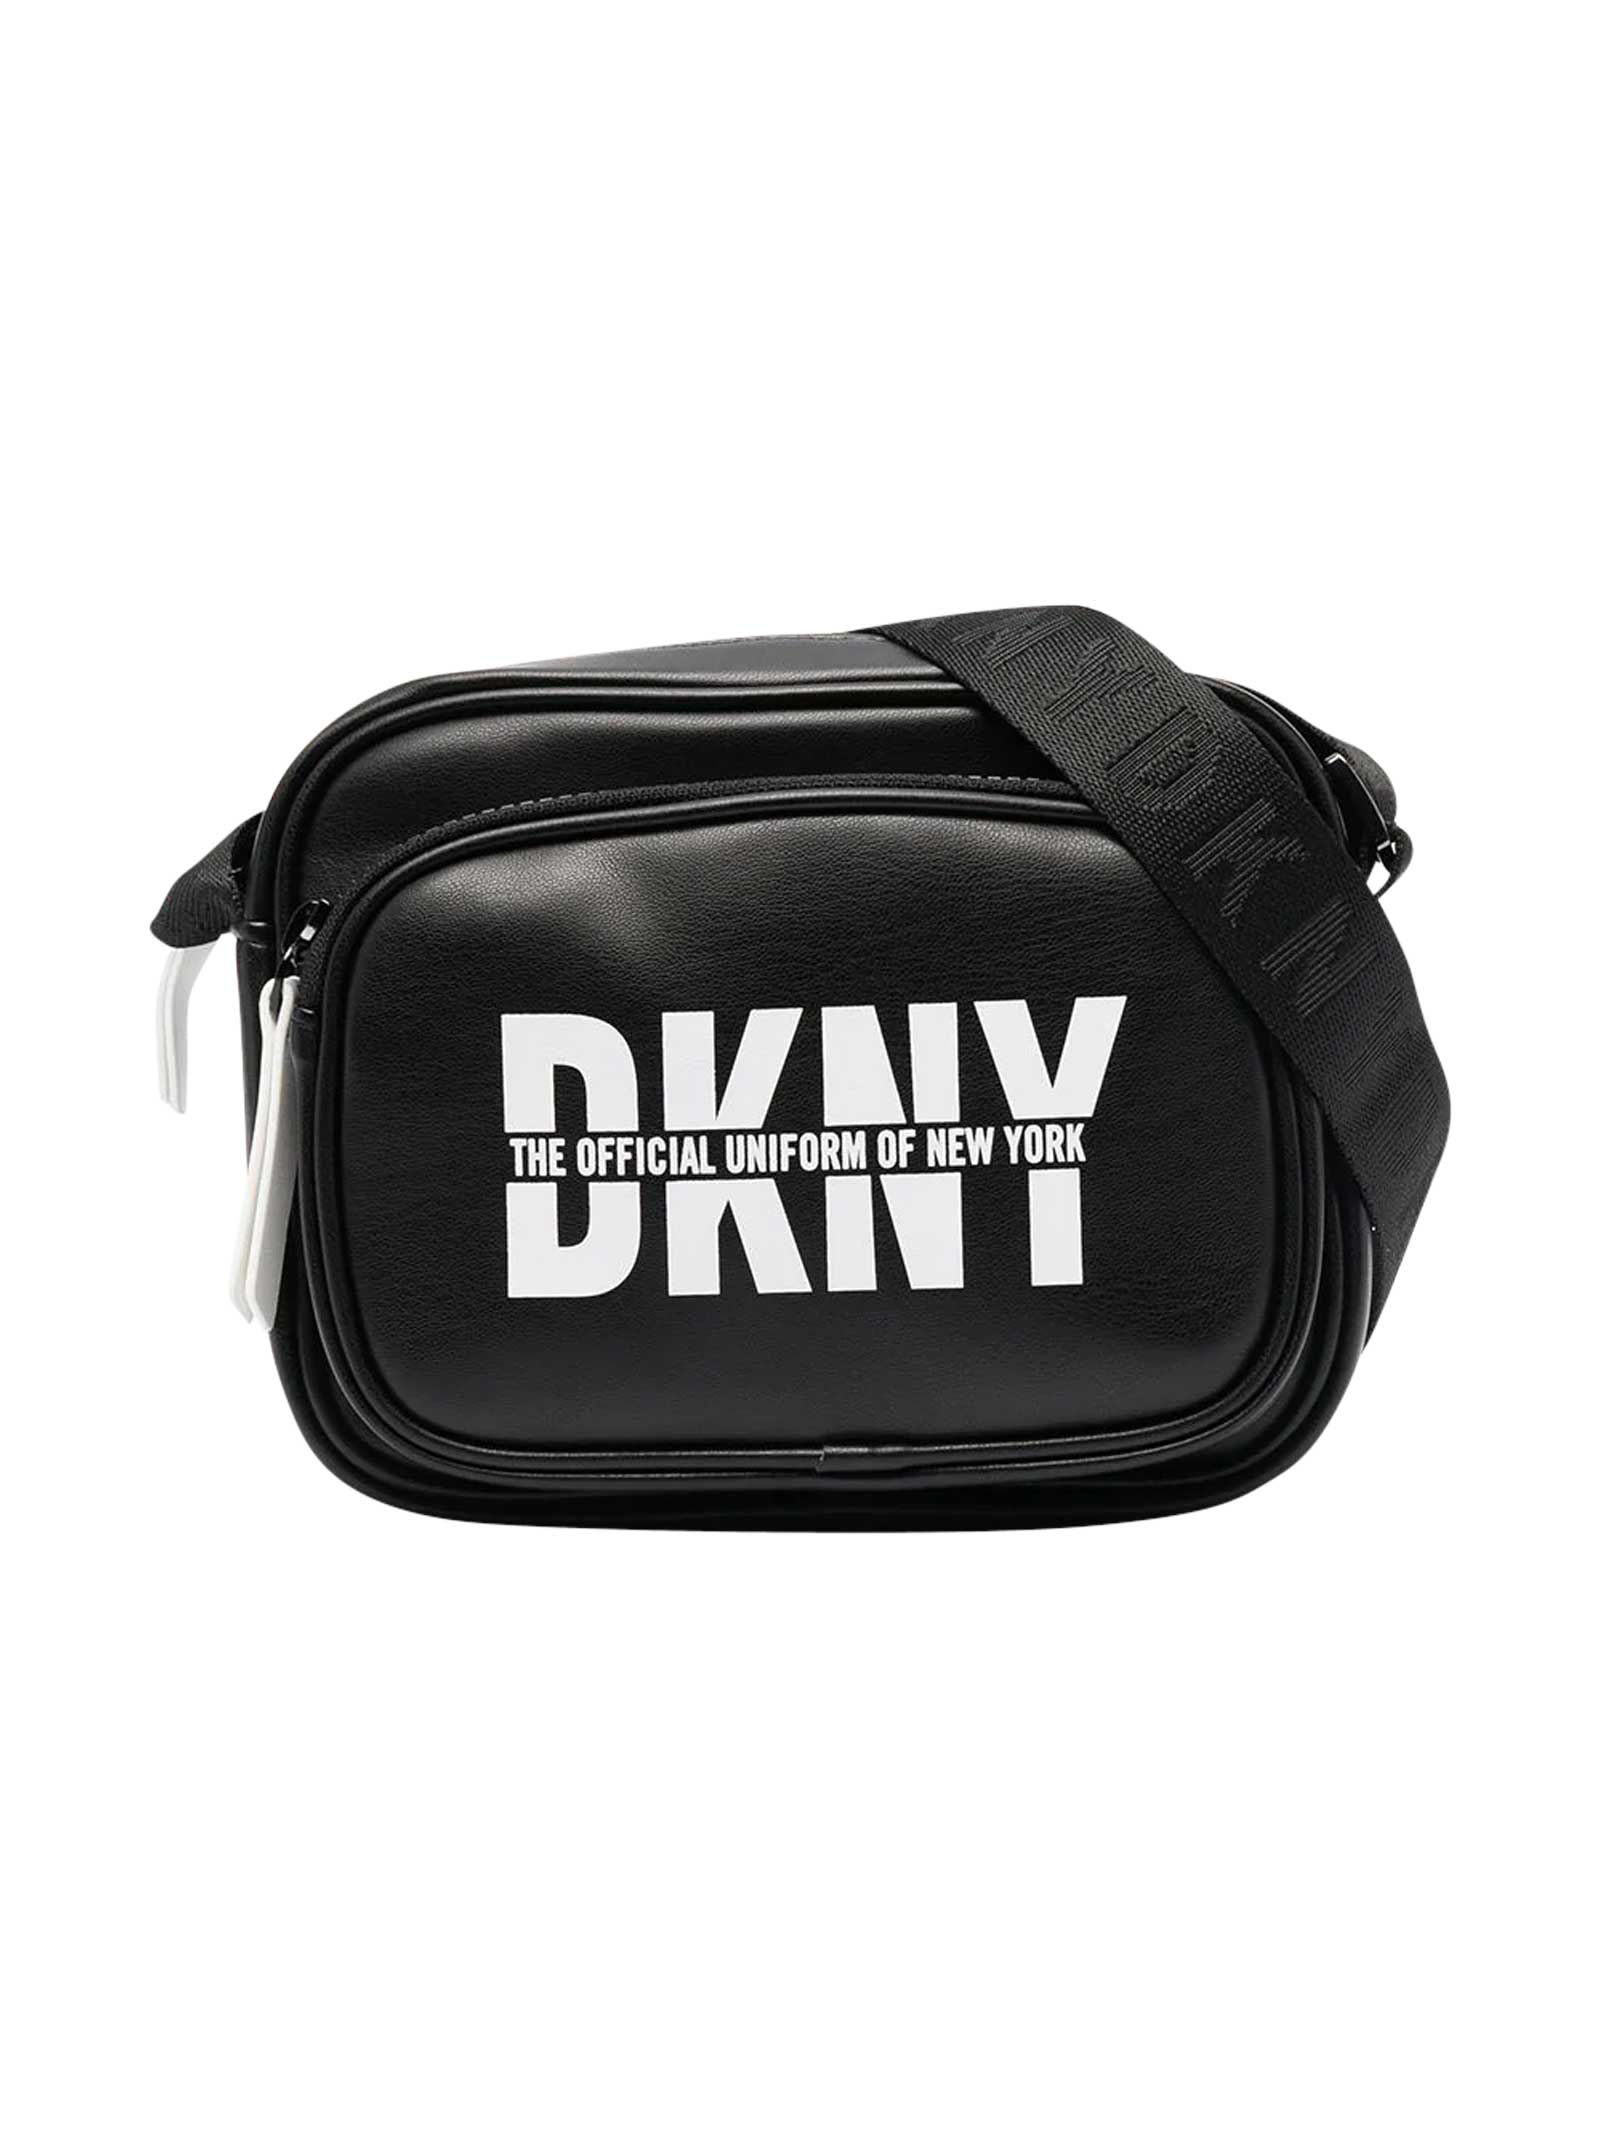 DKNY Black Bag